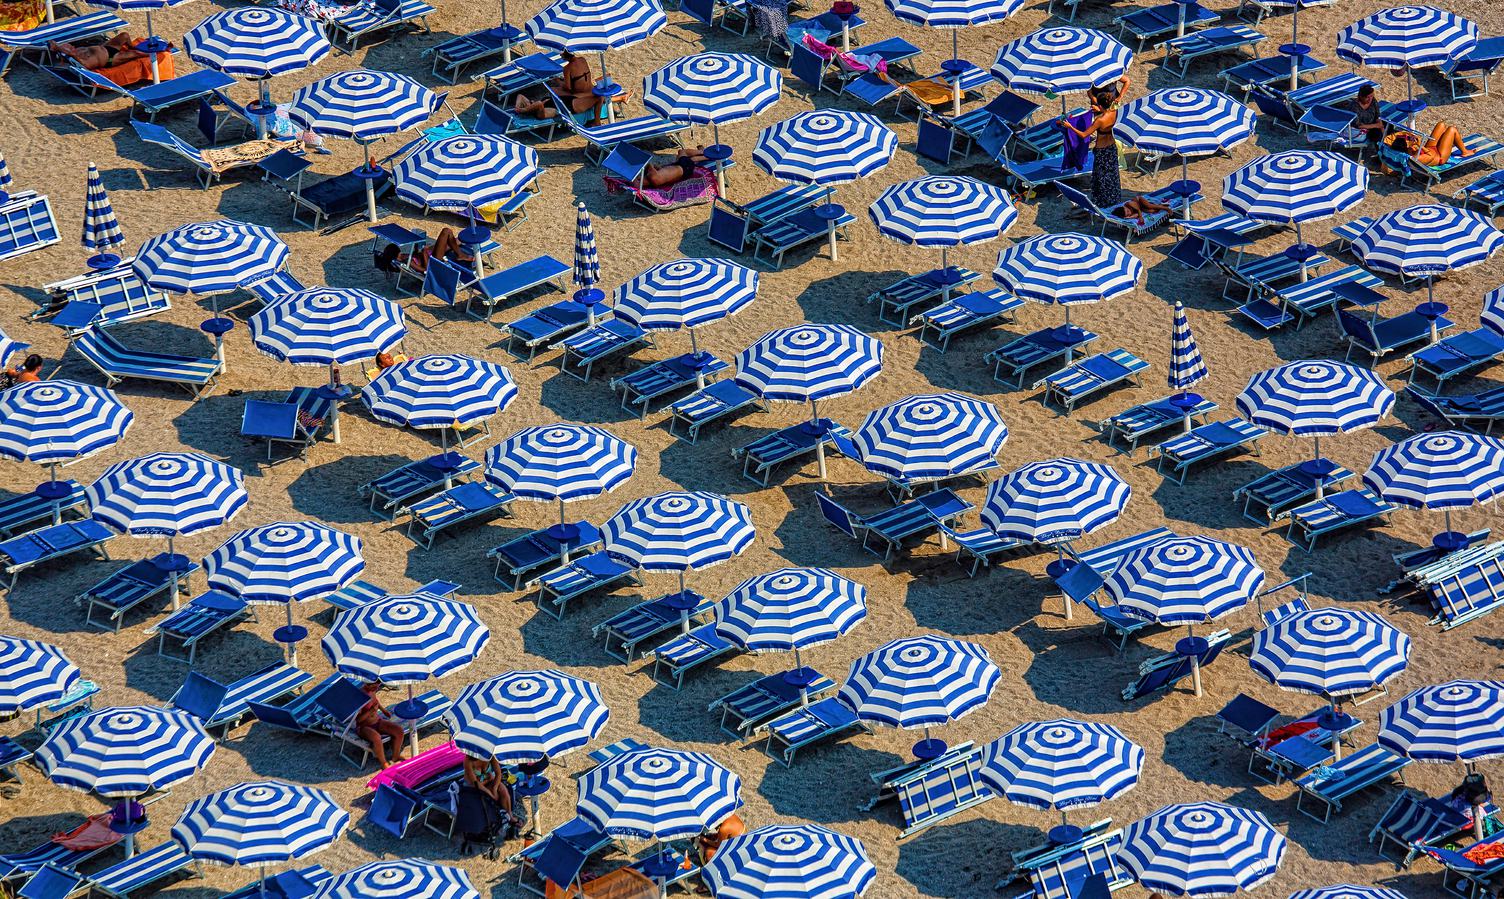 Plenty of Striped Umbrellas on the Beach